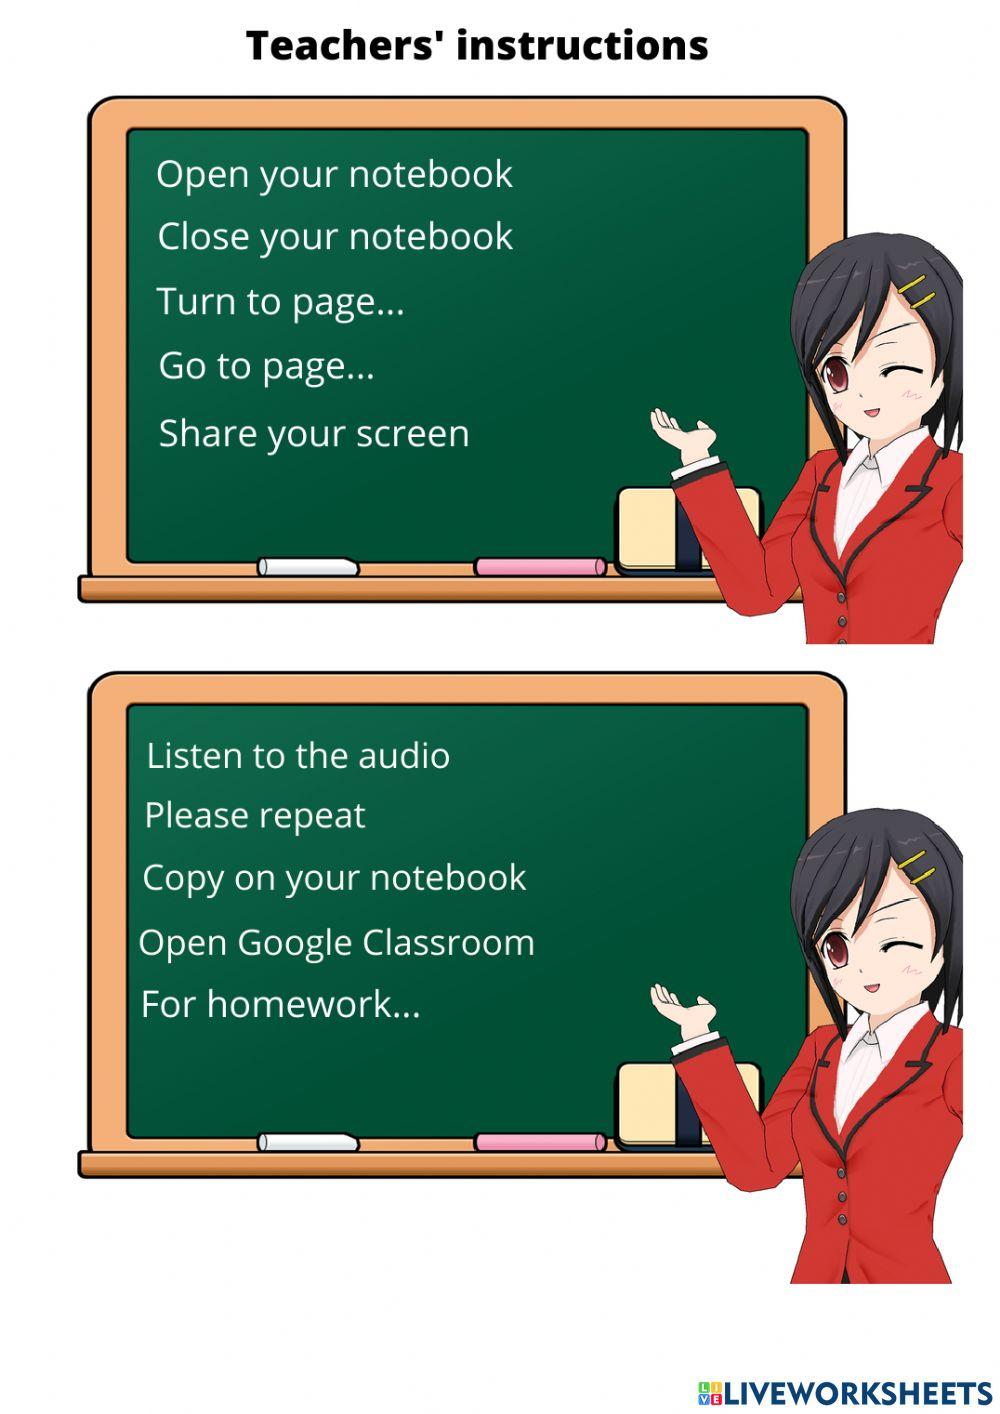 Teacher's intructions